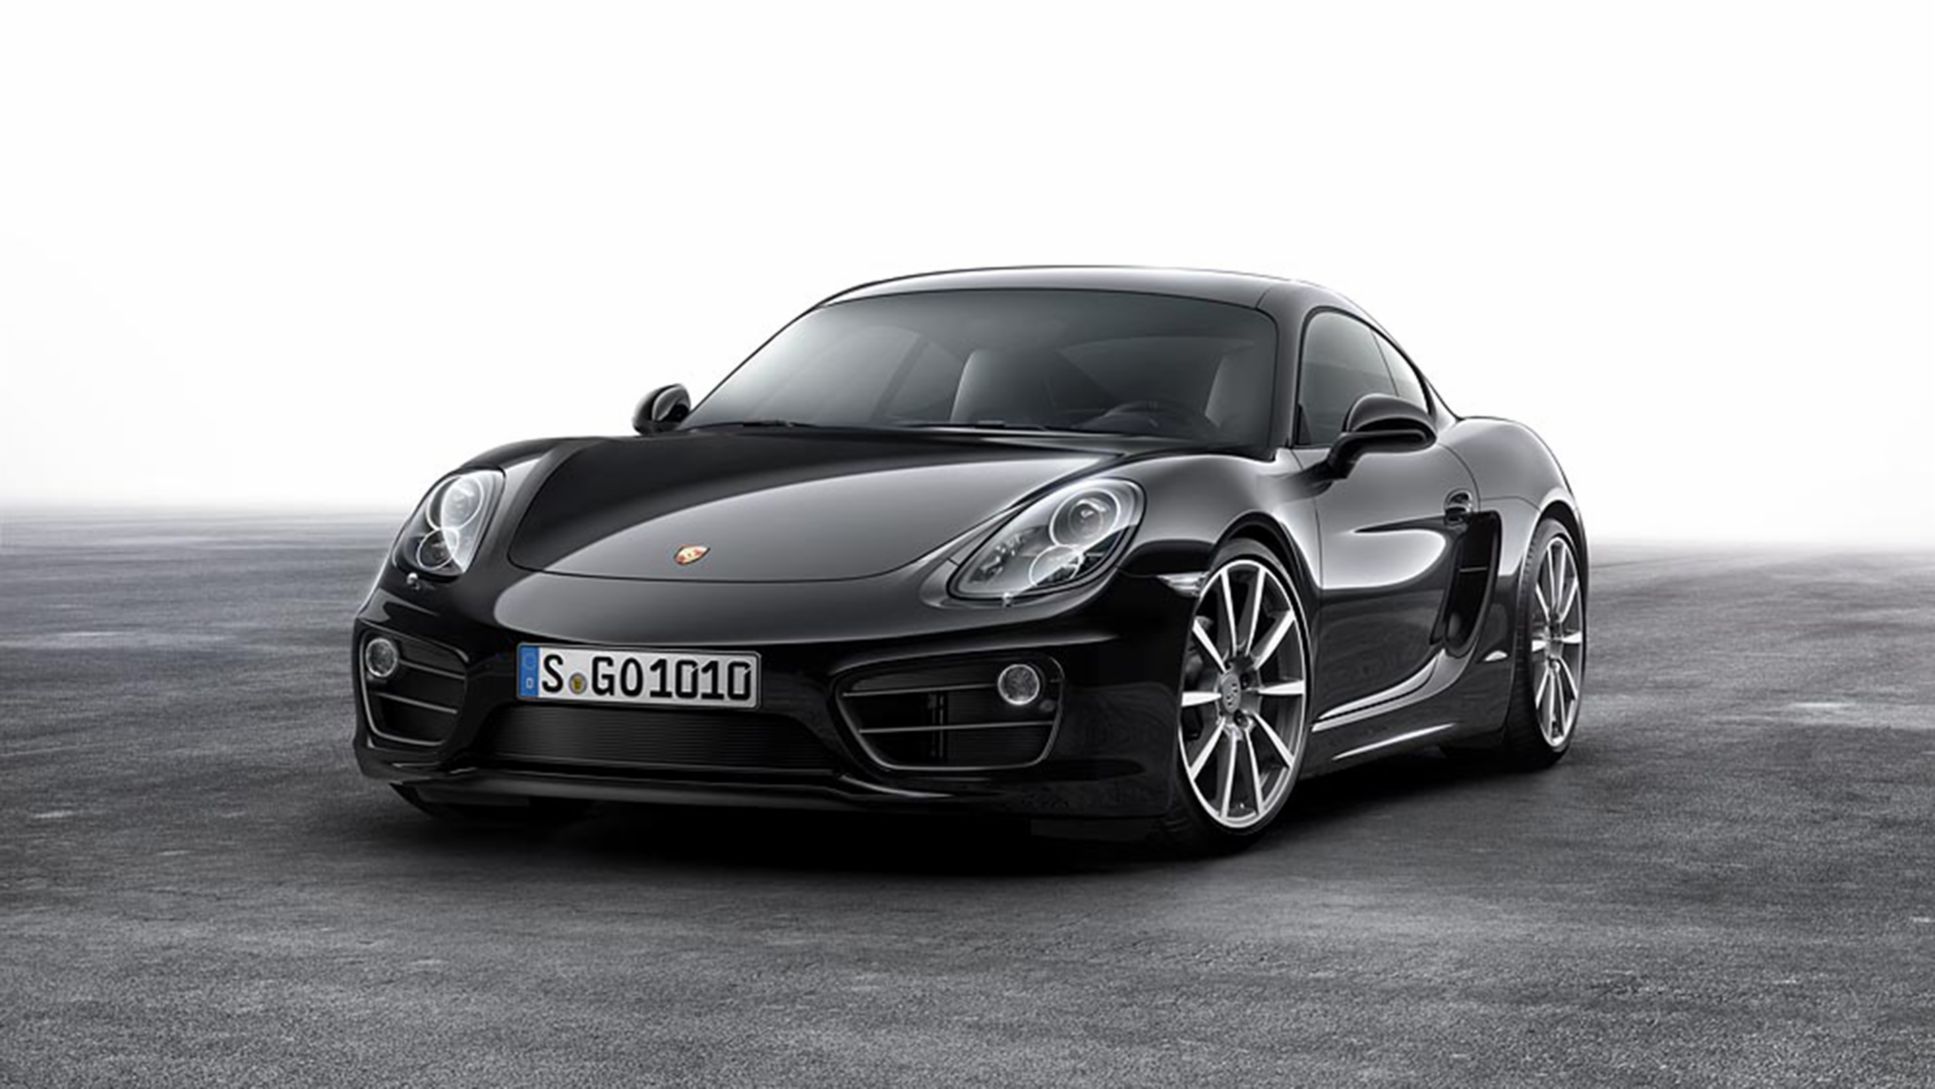 All in black: Cayman Black Edition - Porsche Newsroom